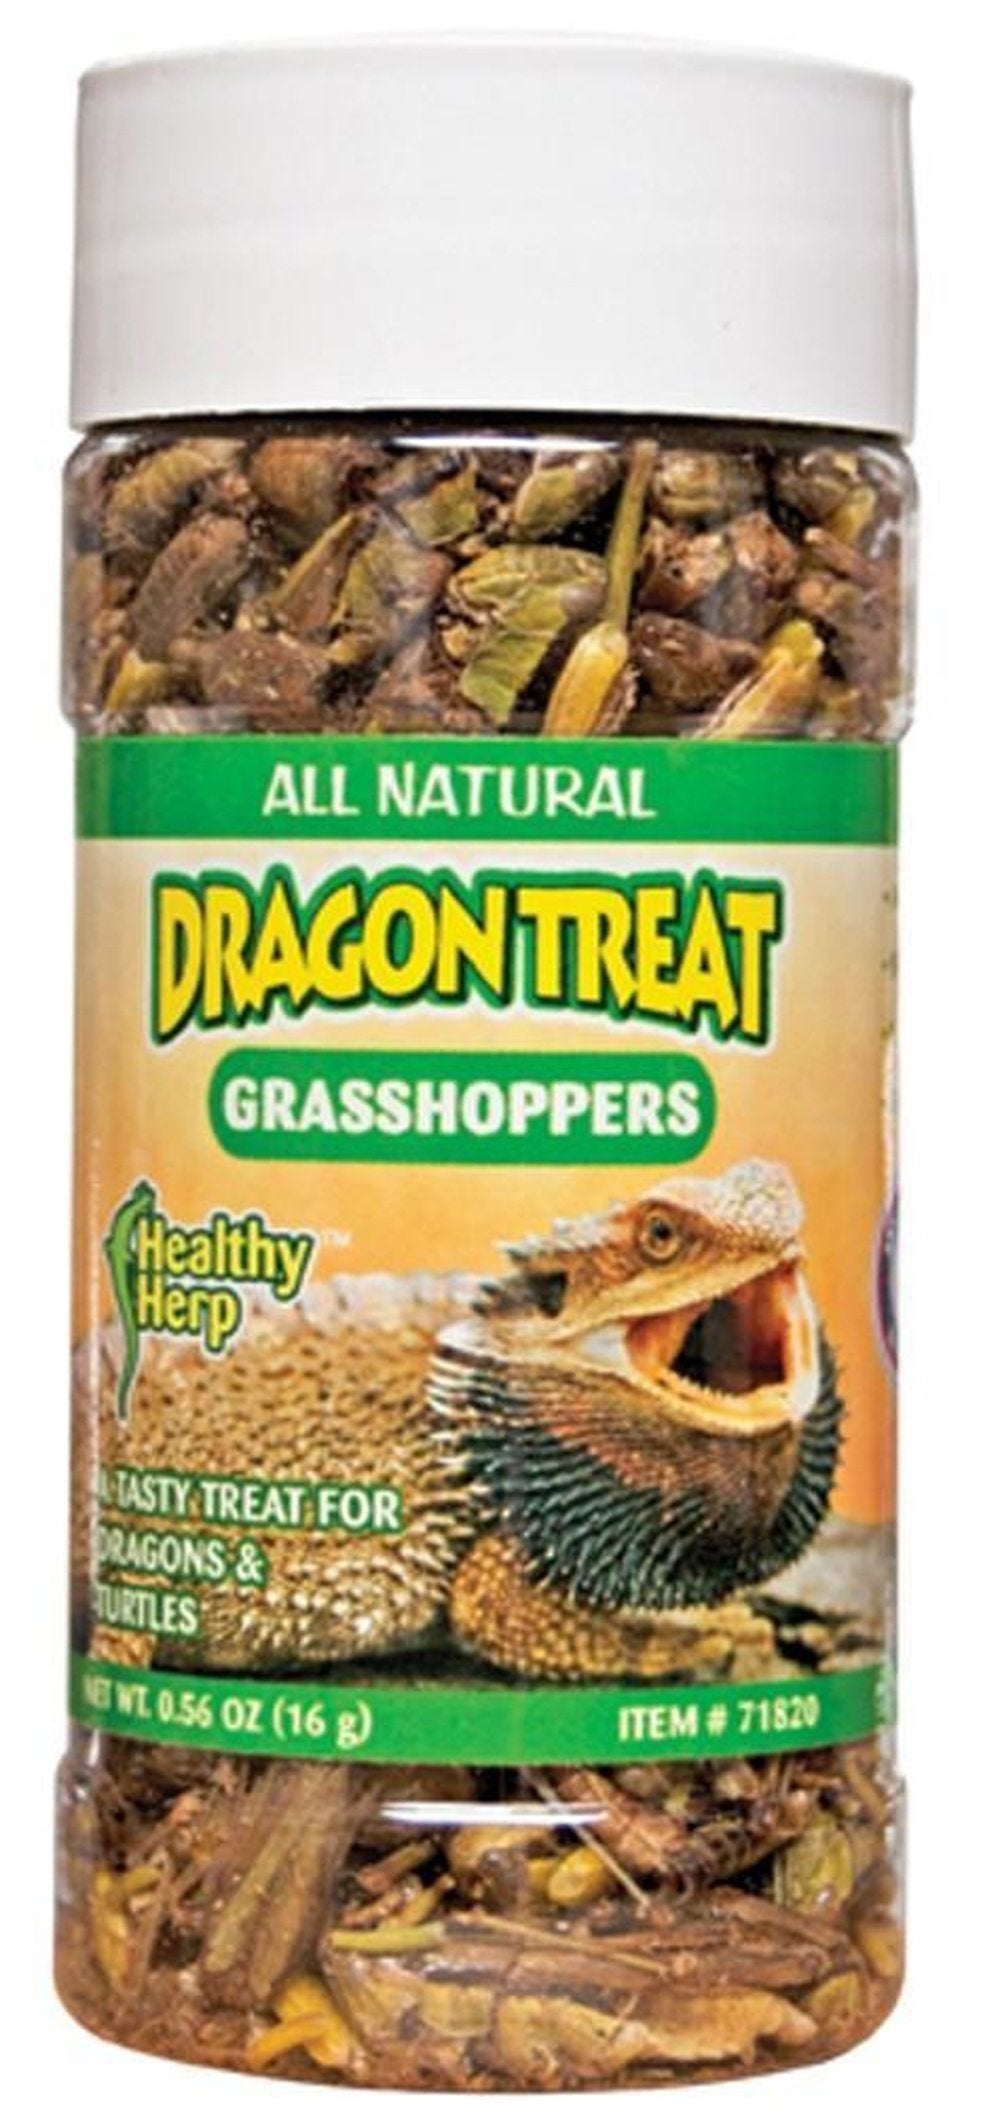 Healthy Herp Dragon Treat Grasshoppers, 0.56oz